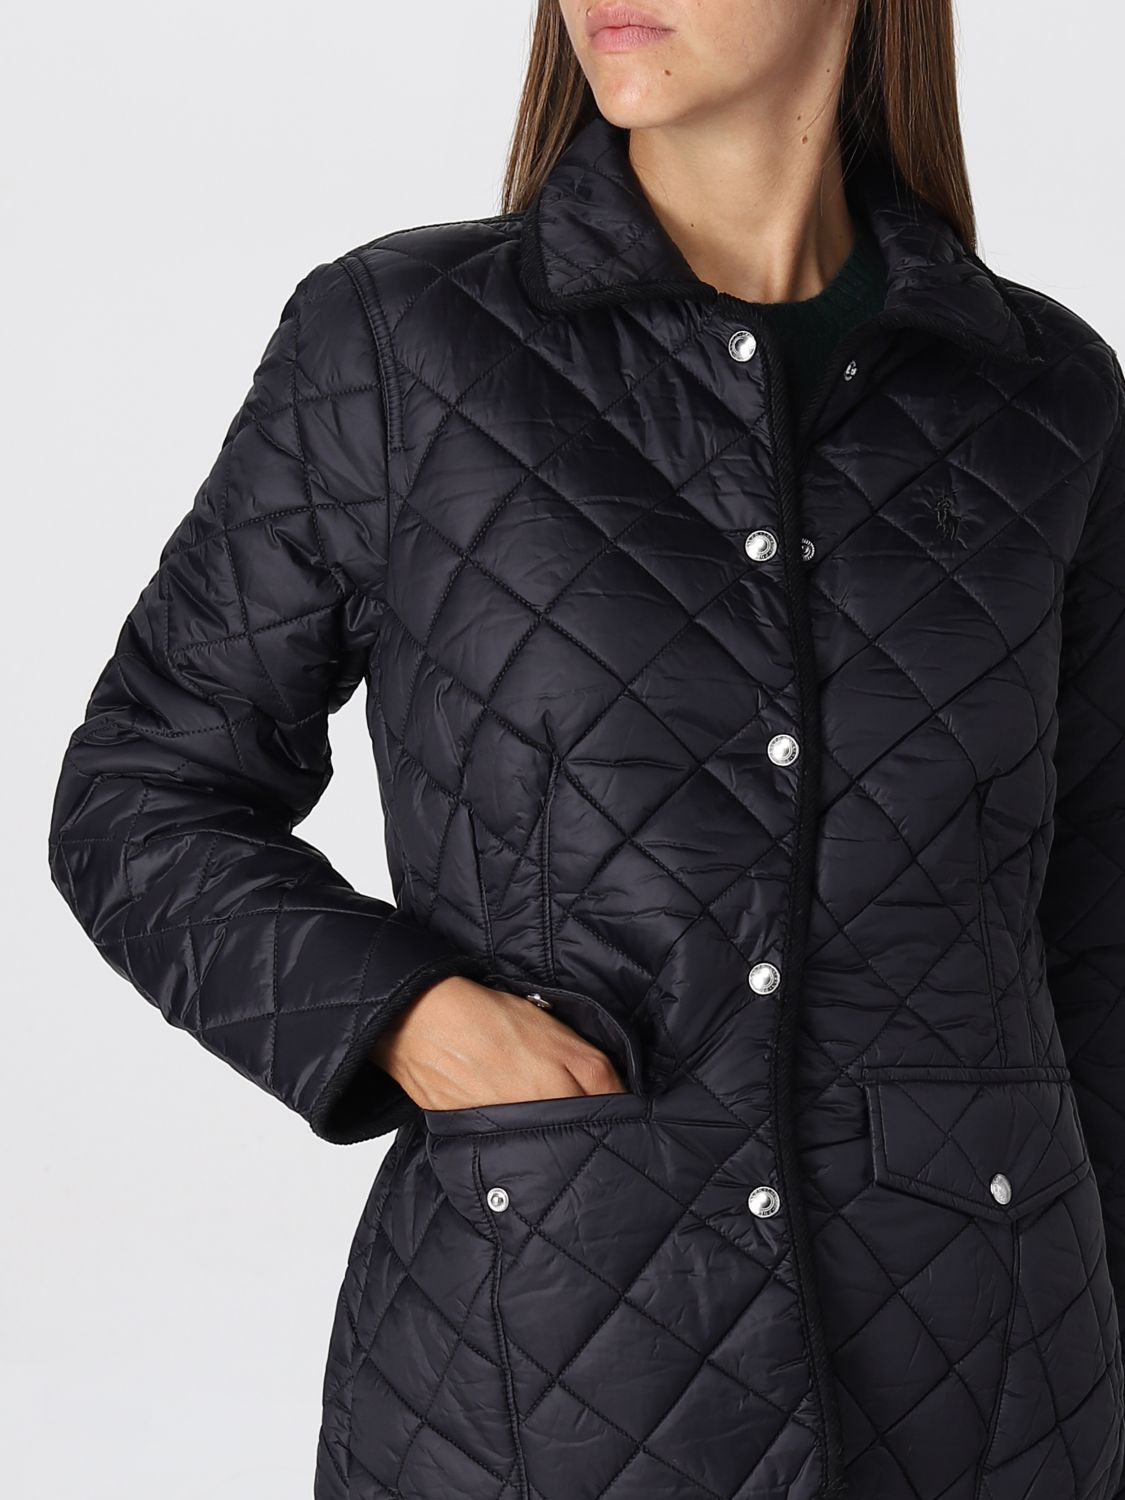 POLO RALPH LAUREN: jacket for women - Black | Polo Ralph Lauren jacket  211854764 online on 